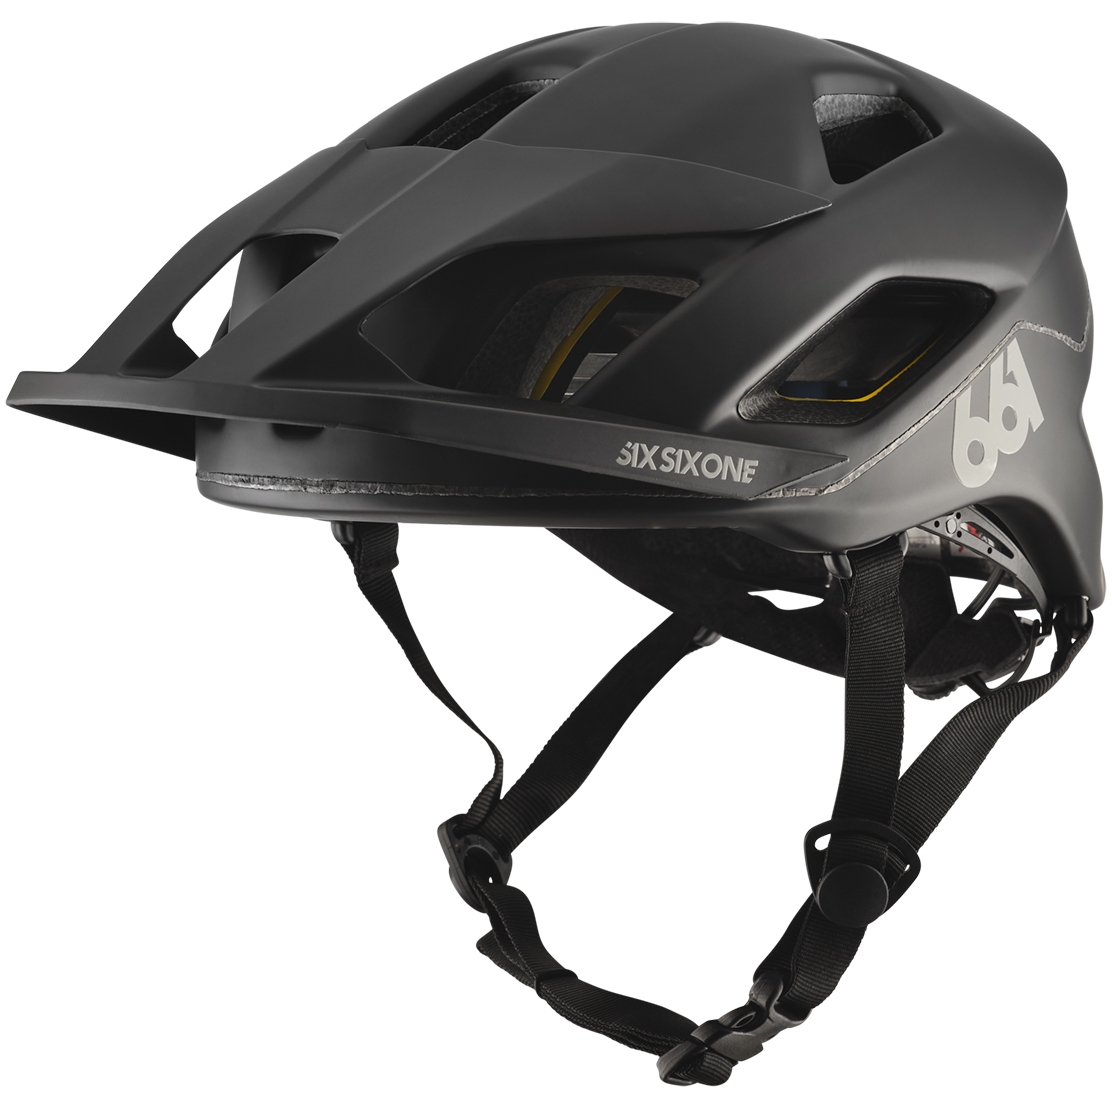 Image of SIXSIXONE Crest Mips Helmet - Black